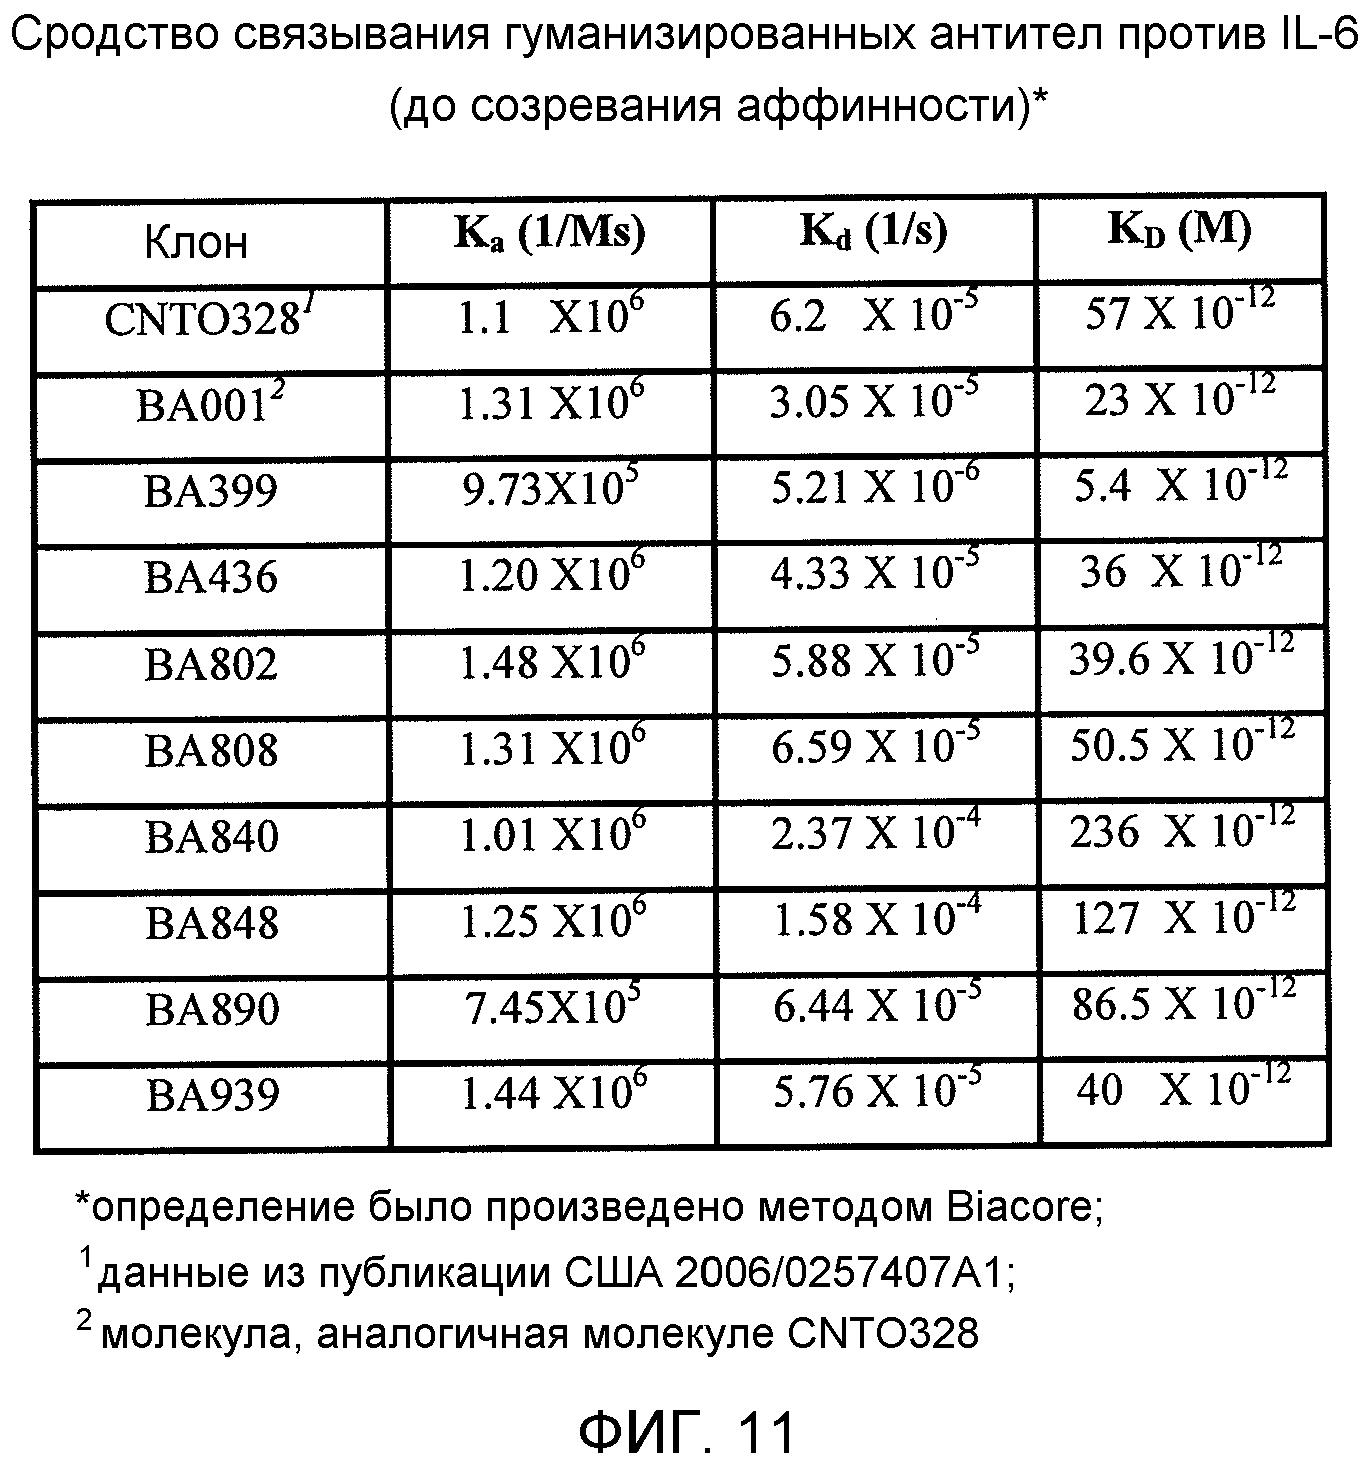 ГУМАНИЗИРОВАННЫЕ АНТИТЕЛА ПРОТИВ IL-6